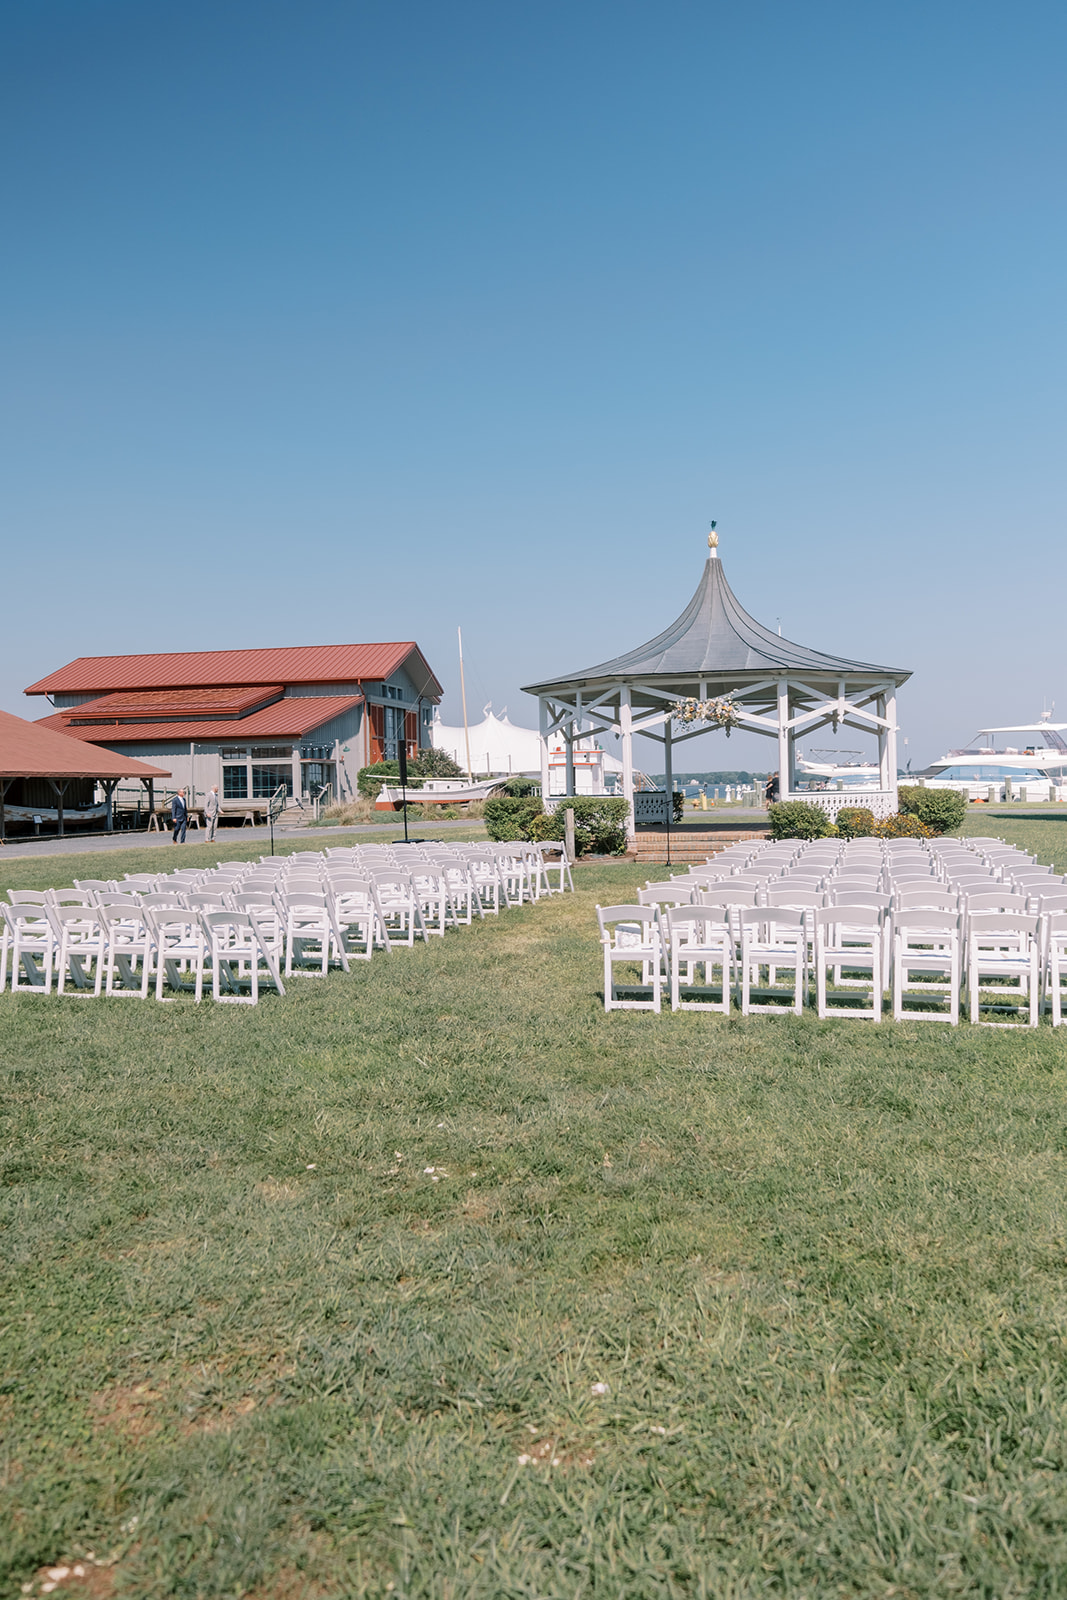 chesapeake bay maritime ceremony setup for summer wedding